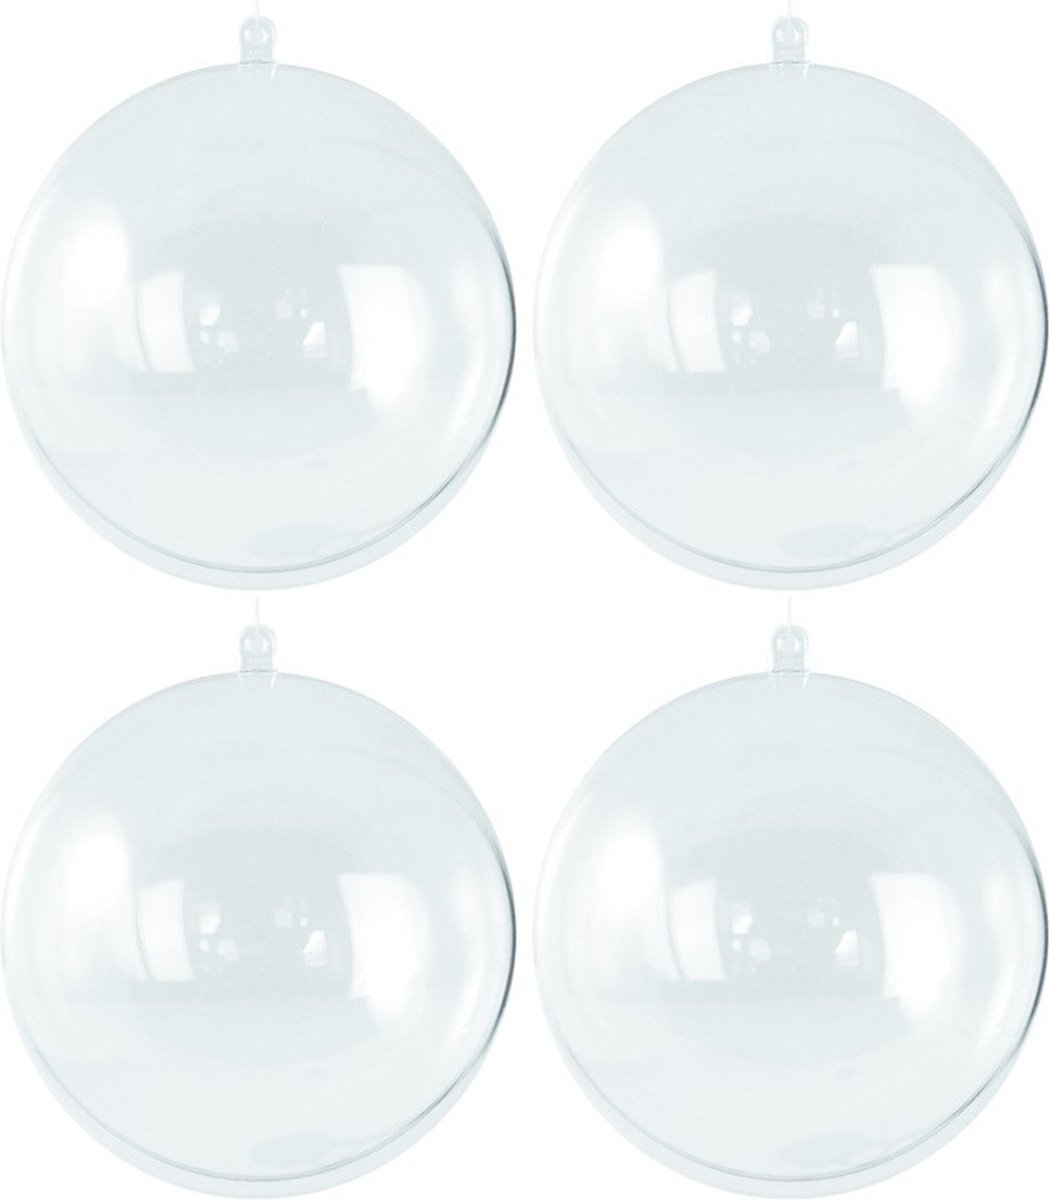 20x Transparante hobby/DIY kerstballen 6 cm - Knutselen - Kerstballen maken hobby materiaal/basis materialen